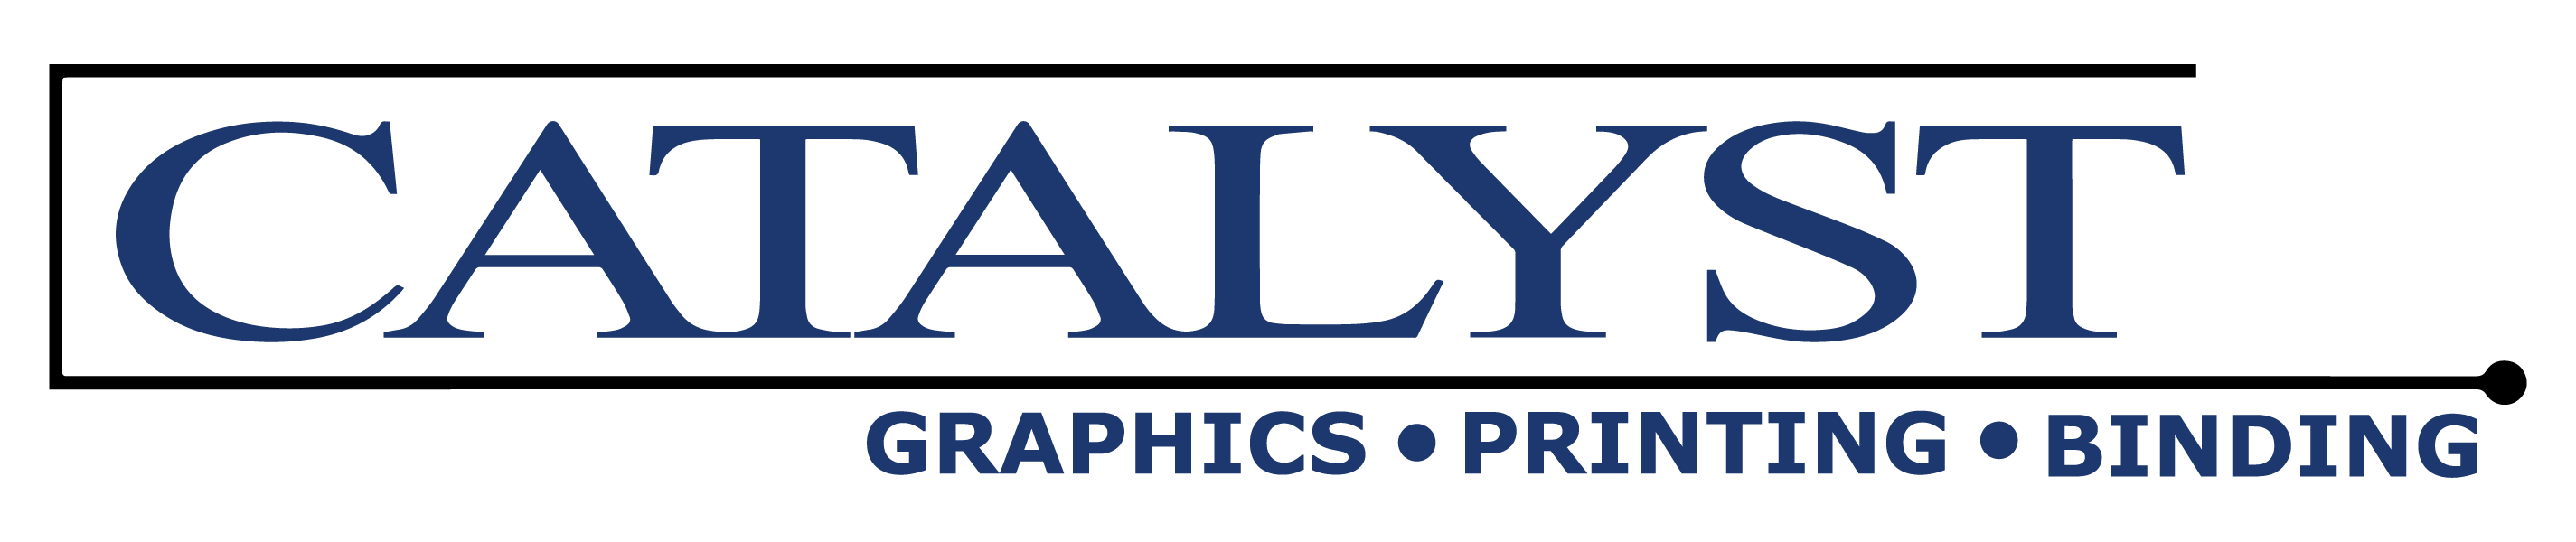 Catalyst Graphics logo